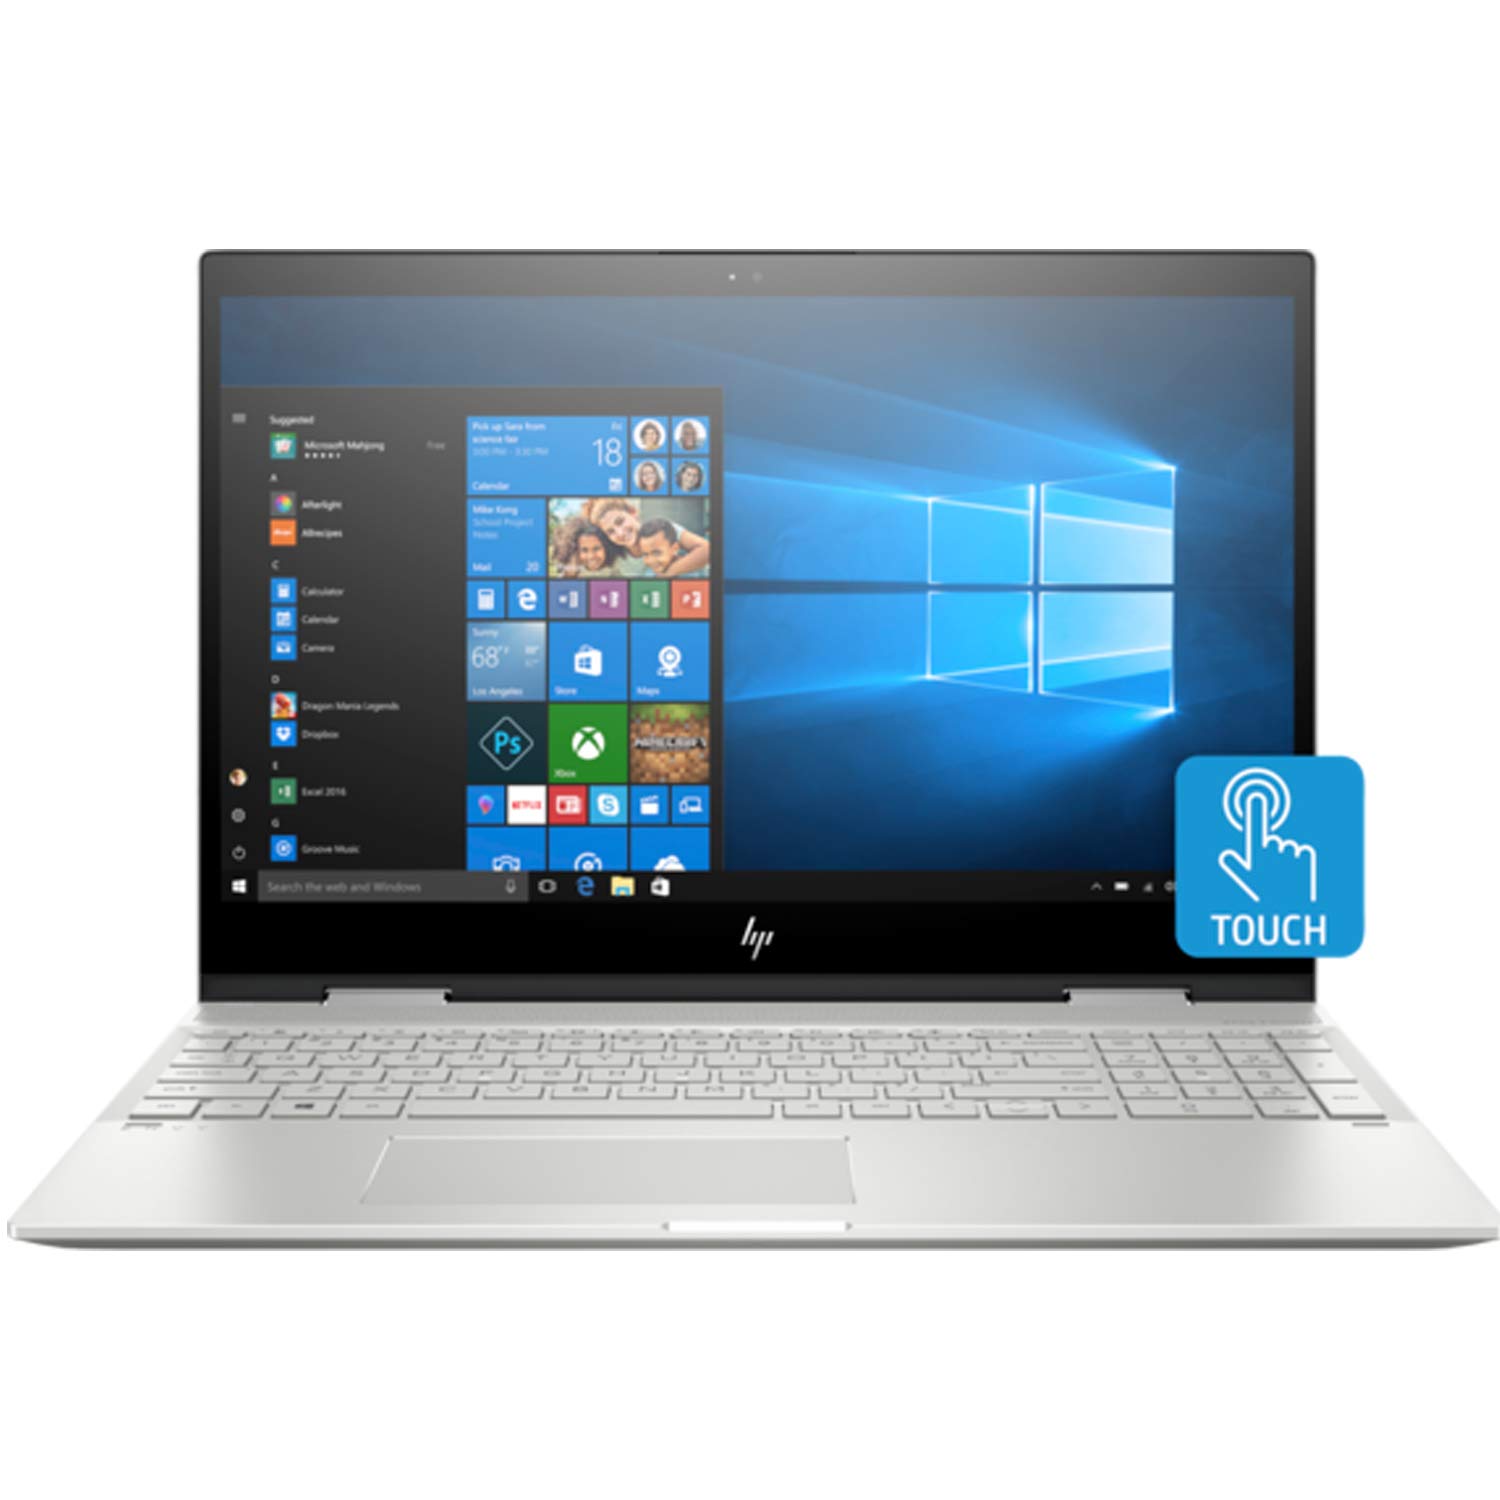 HP Envy m6w105dx 15.6″ Premium 2in1 Laptop with 8th Gen Intel i7 8GB